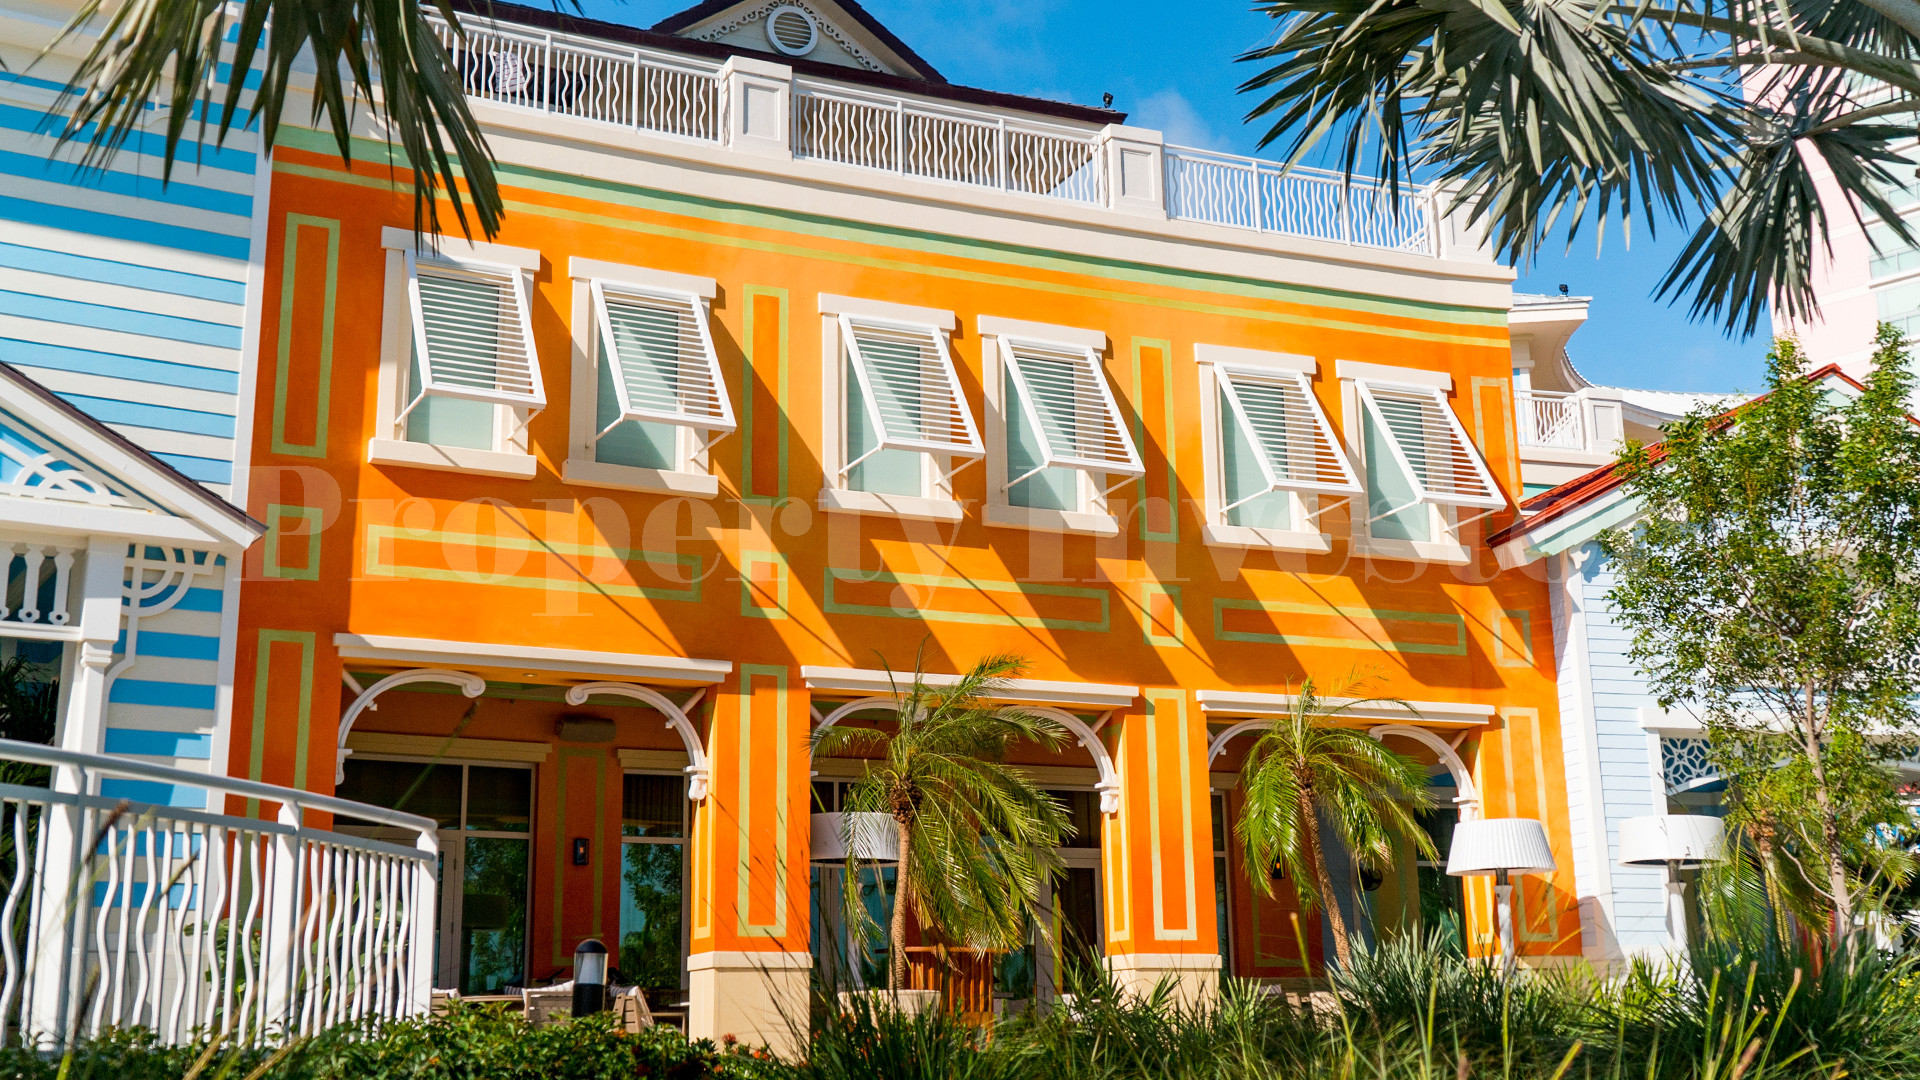 3 Bedroom Condo-Hotel Residence in the Bahamas (Residence 115)